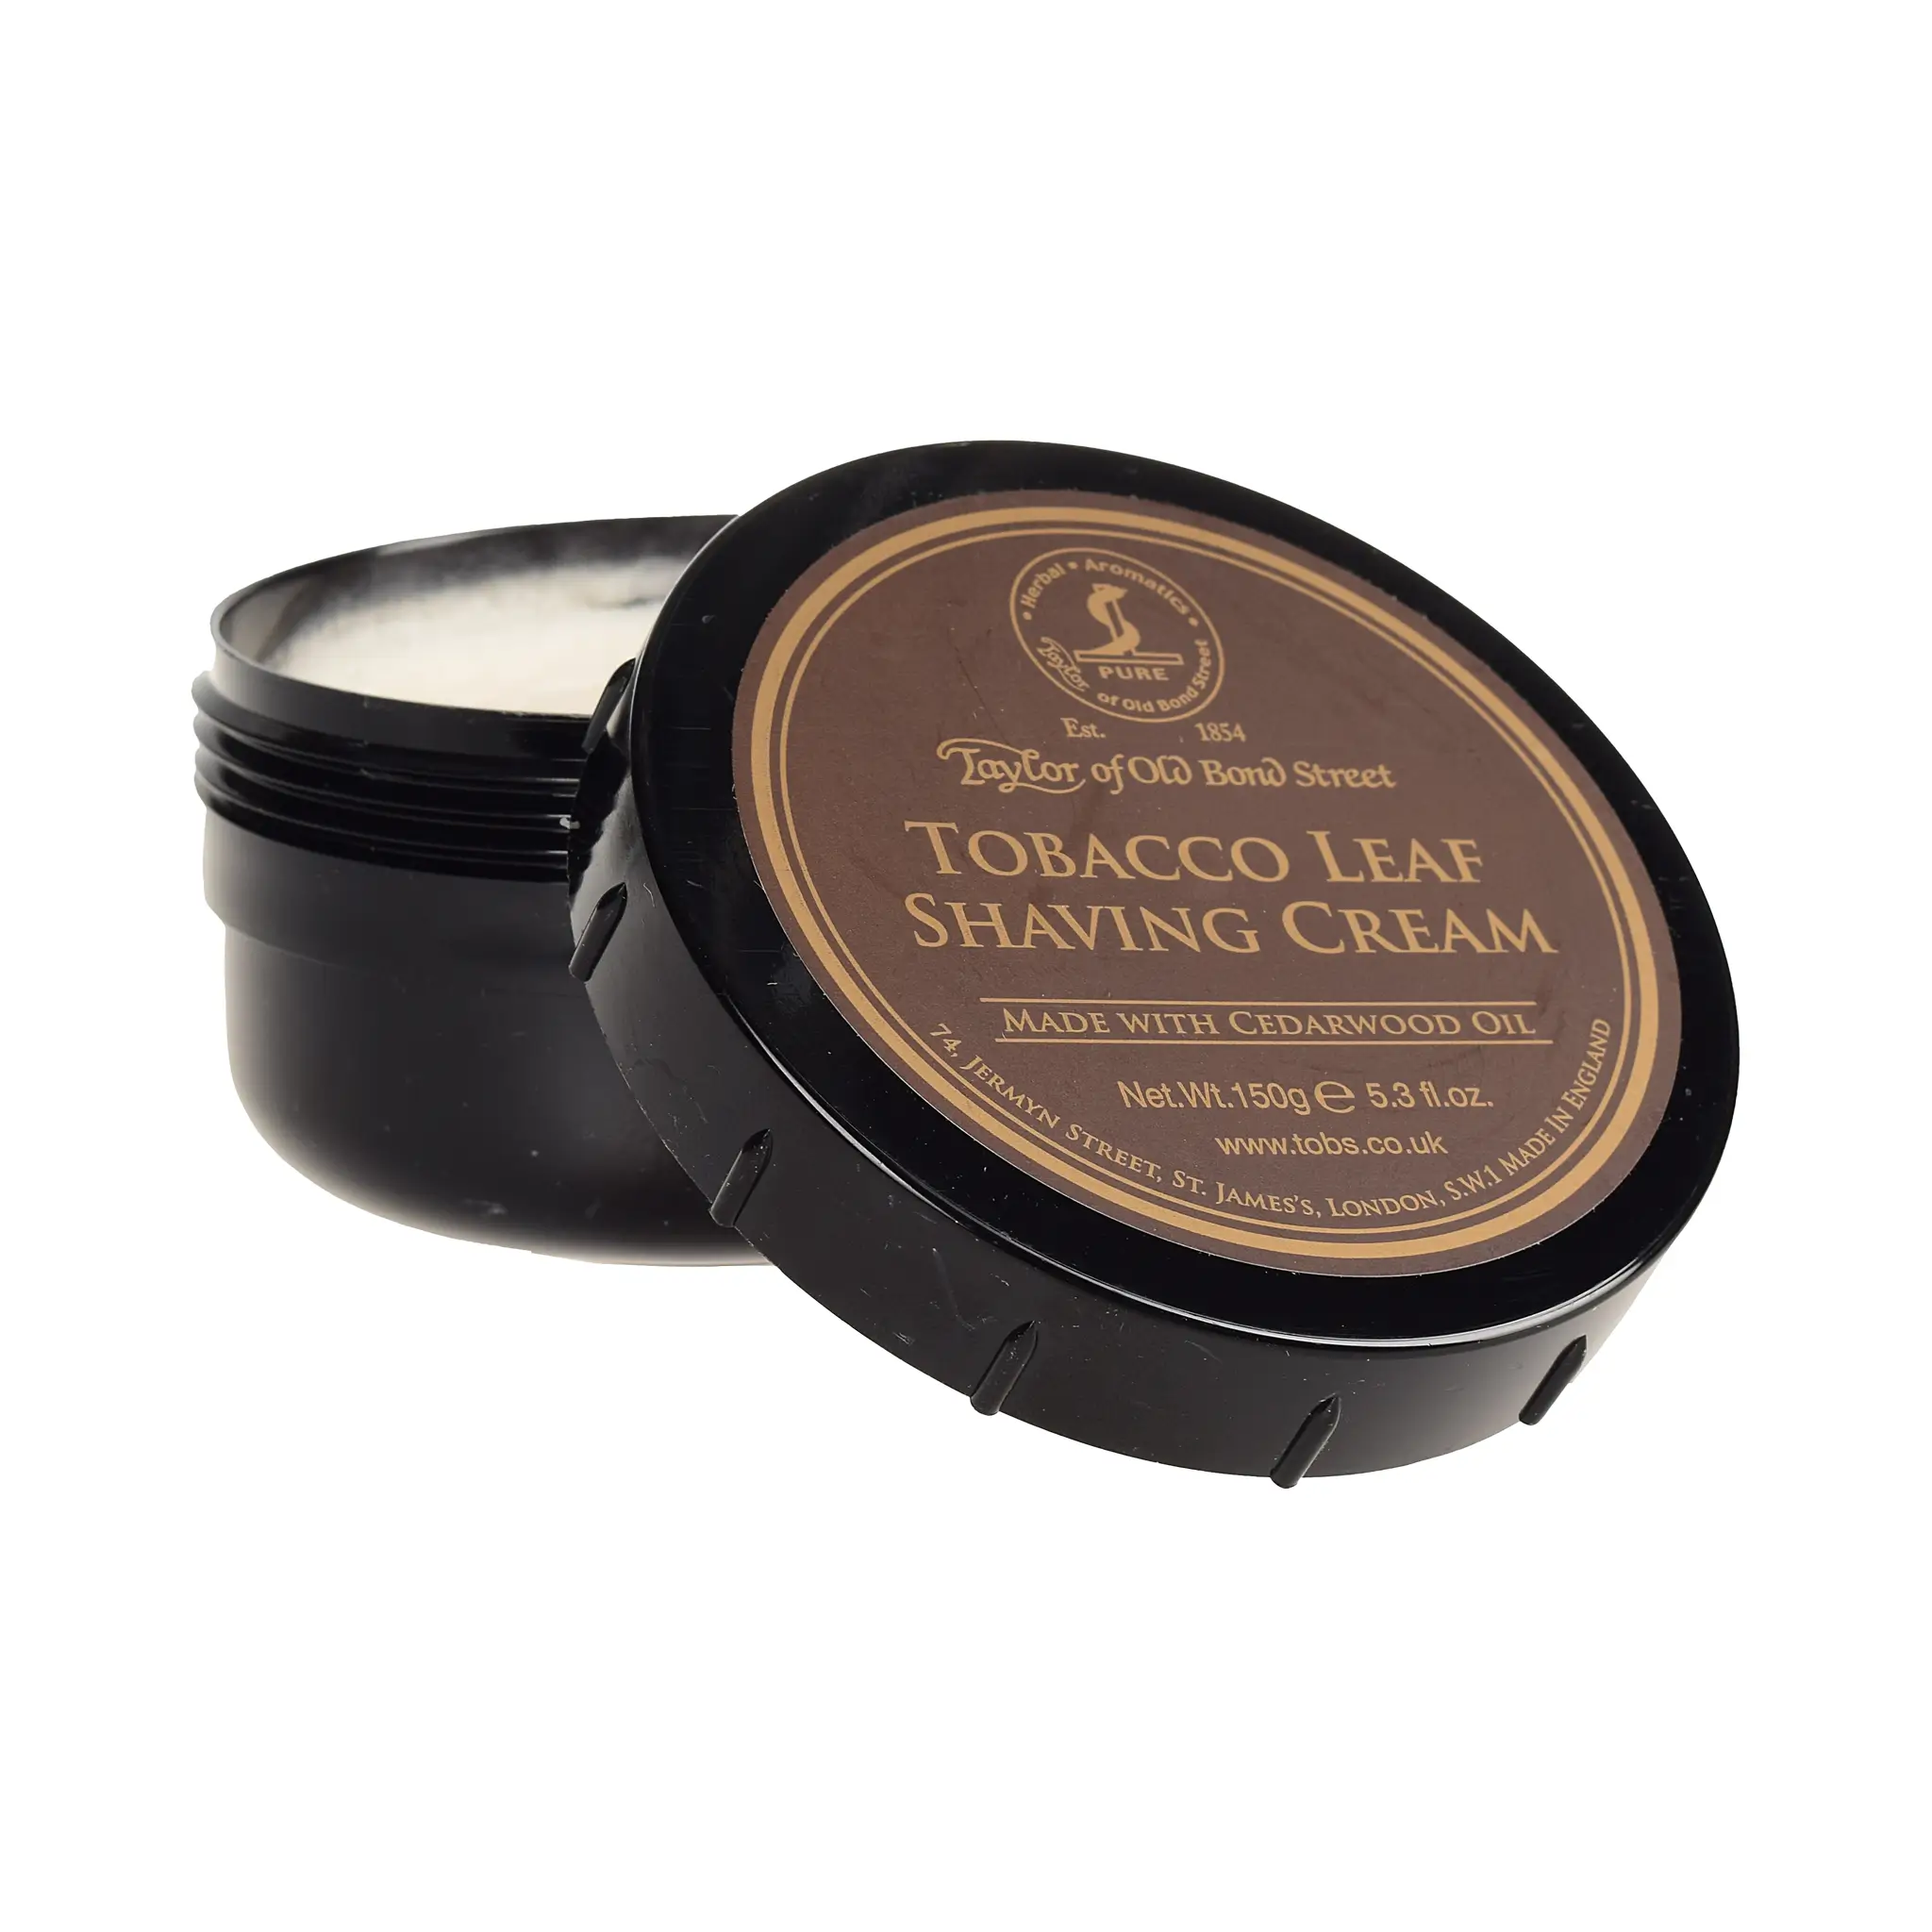 STREET Leaf OLD Tabacco 150 Shaving TAYLOR g Tonsus OF Cream, – BOND